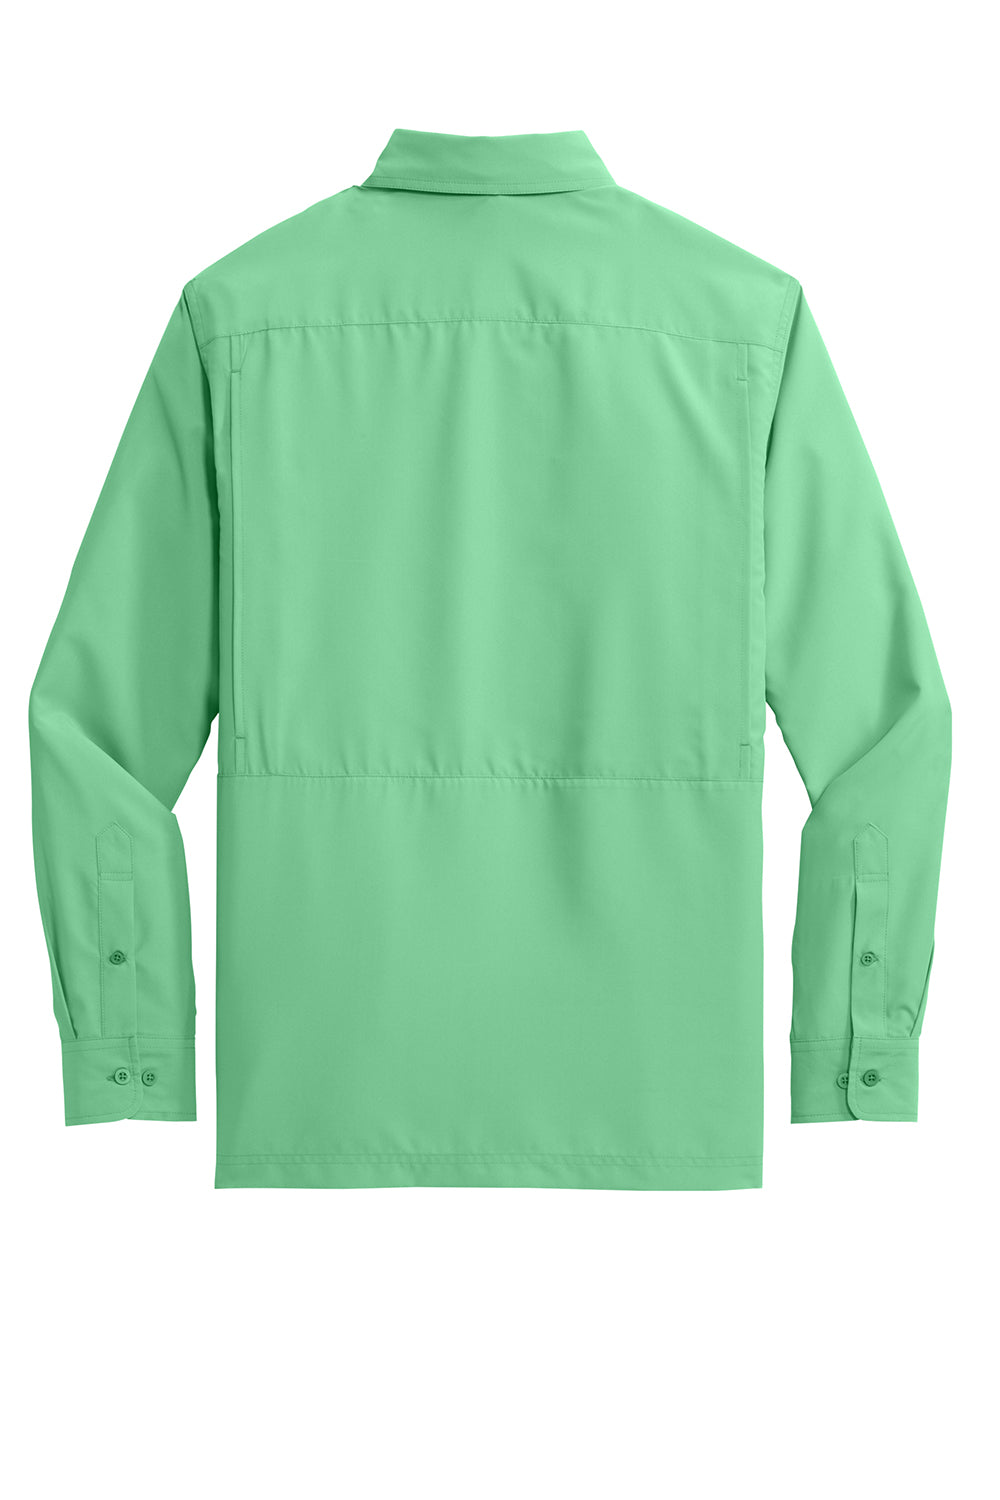 Port Authority W960 Mens Daybreak Moisture Wicking Long Sleeve Button Down Shirt w/ Double Pockets Bright Seafoam Green Flat Back